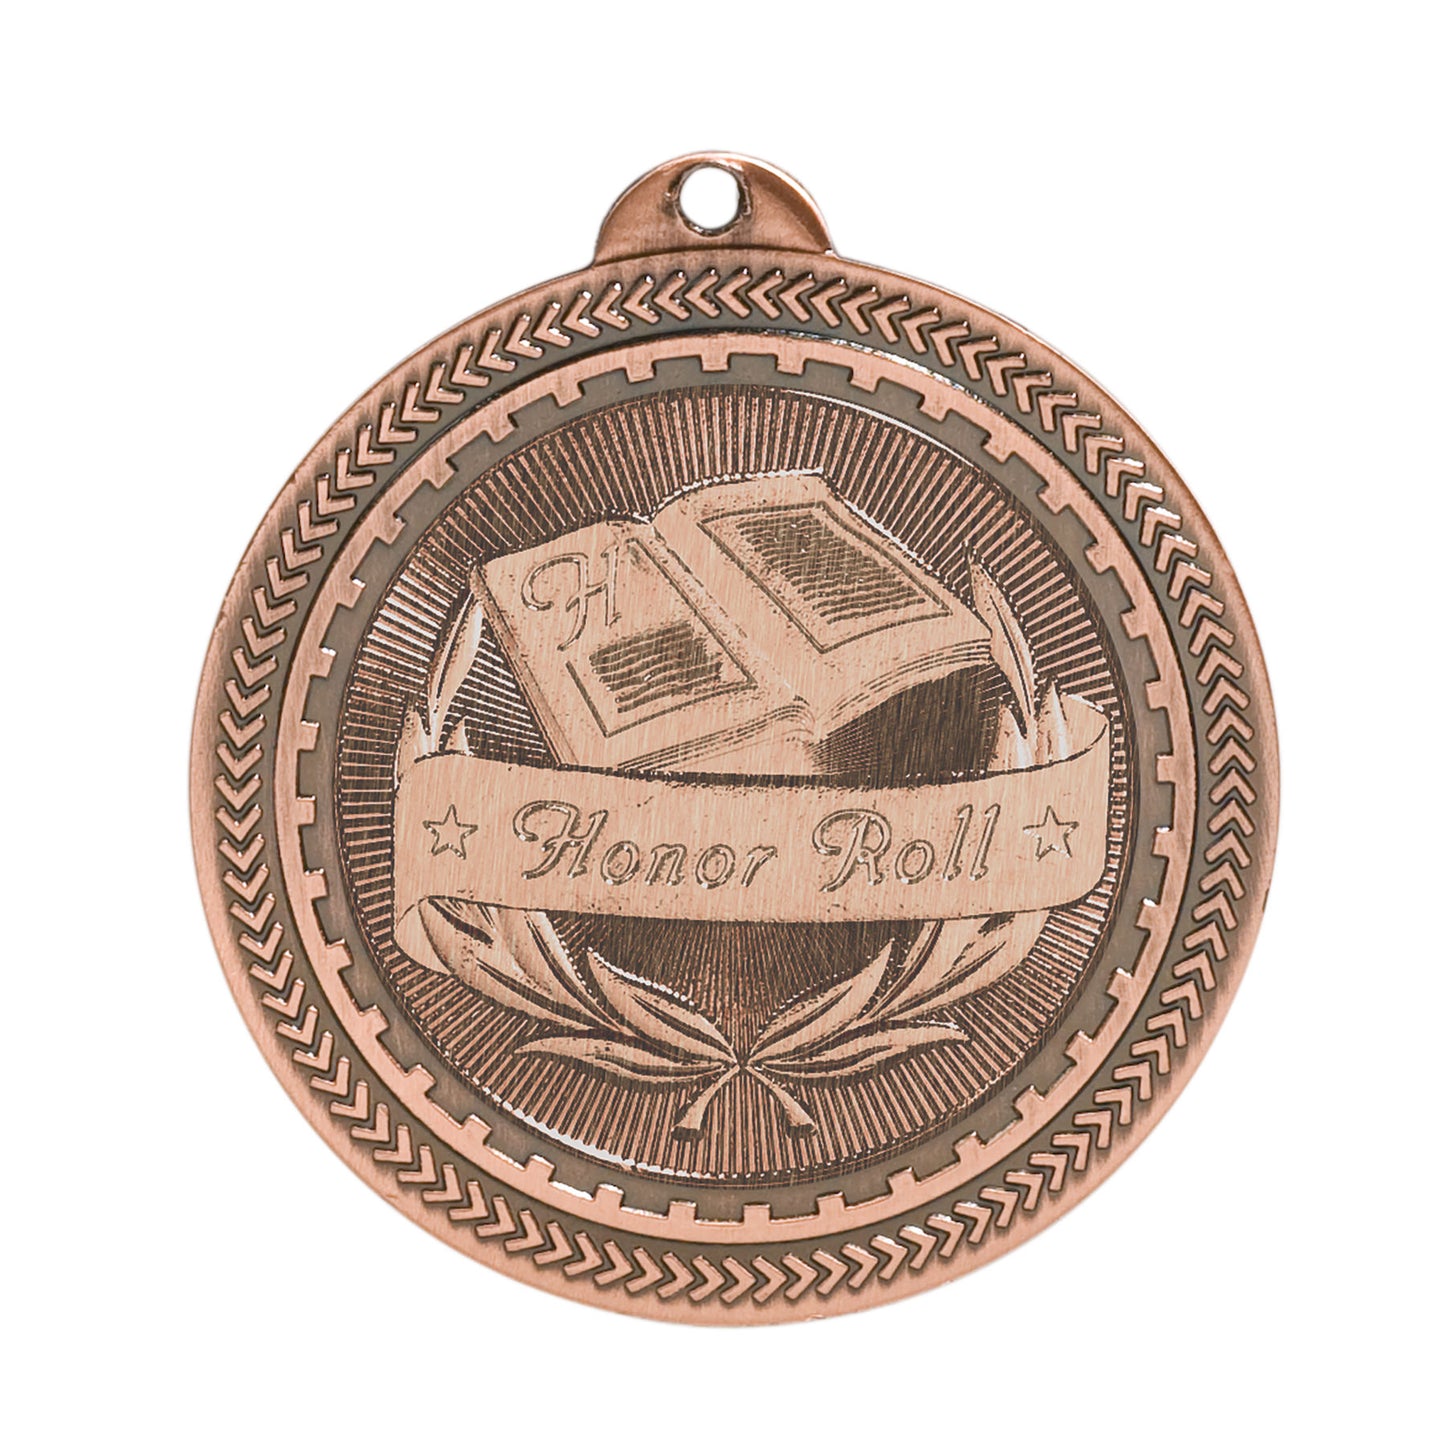 2" Honor Roll Laserable BriteLazer Medal